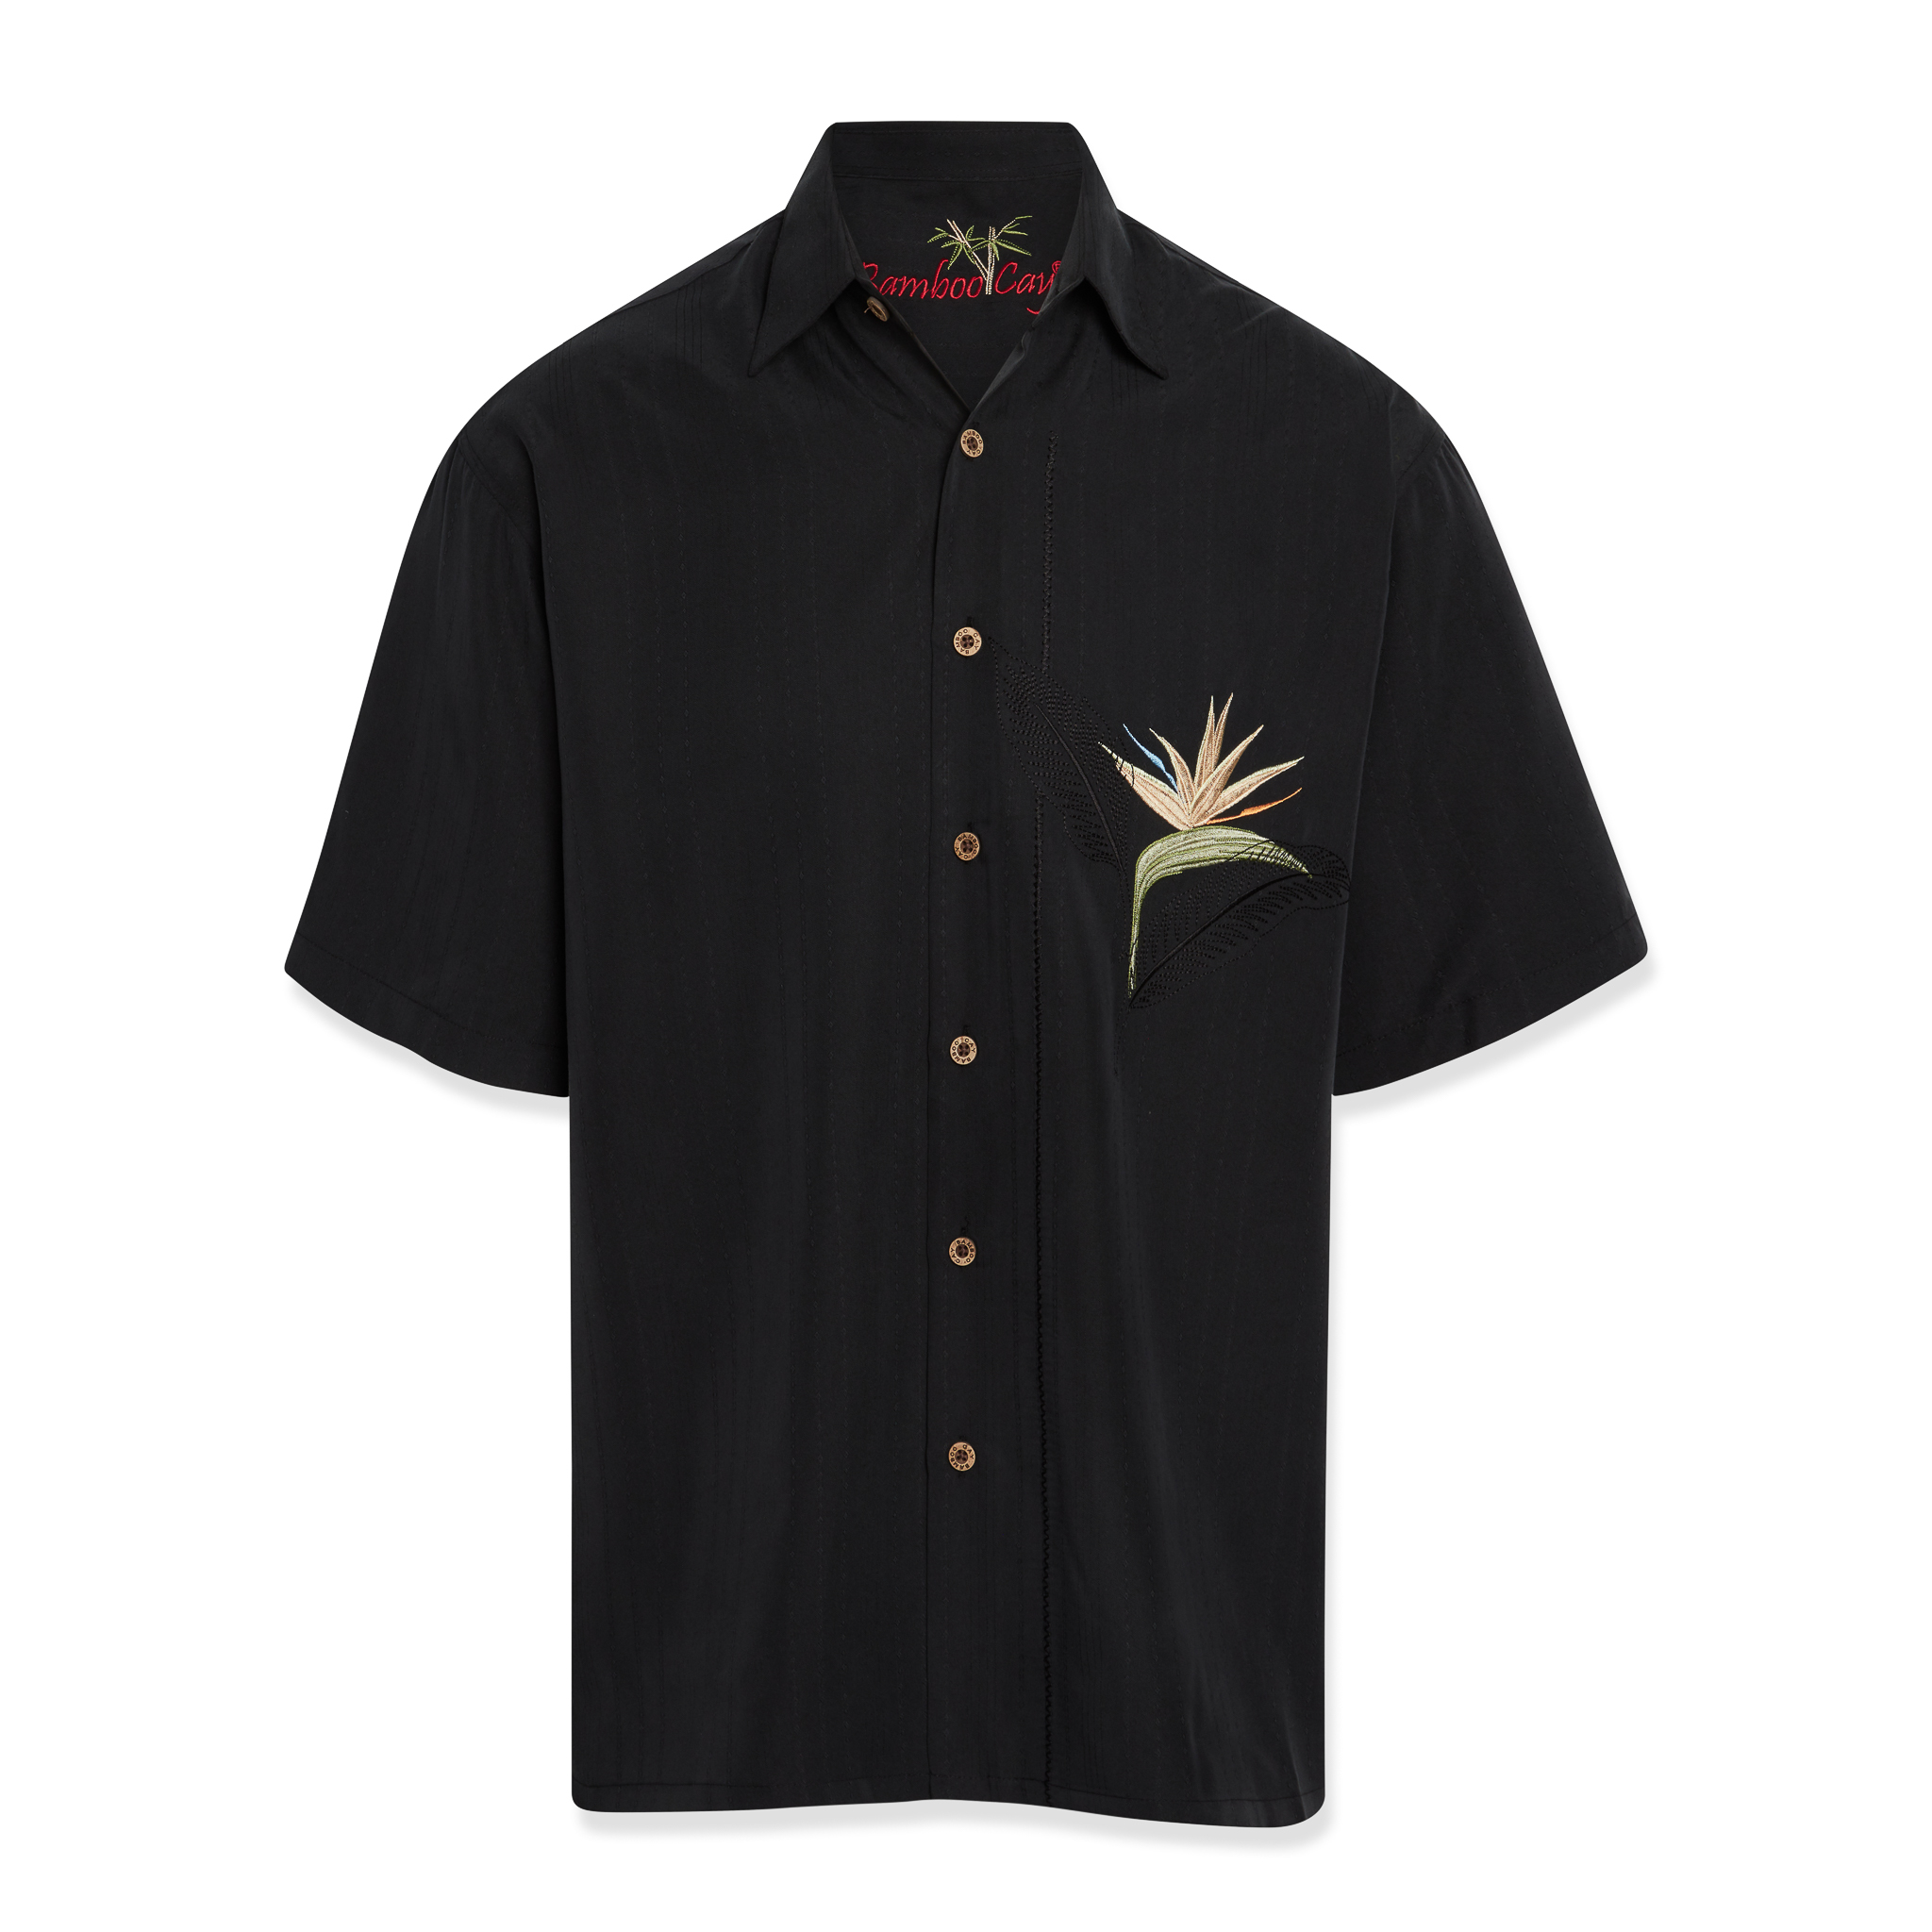 bamboo cay embroidered mens short sleeve bird of paradise shirt